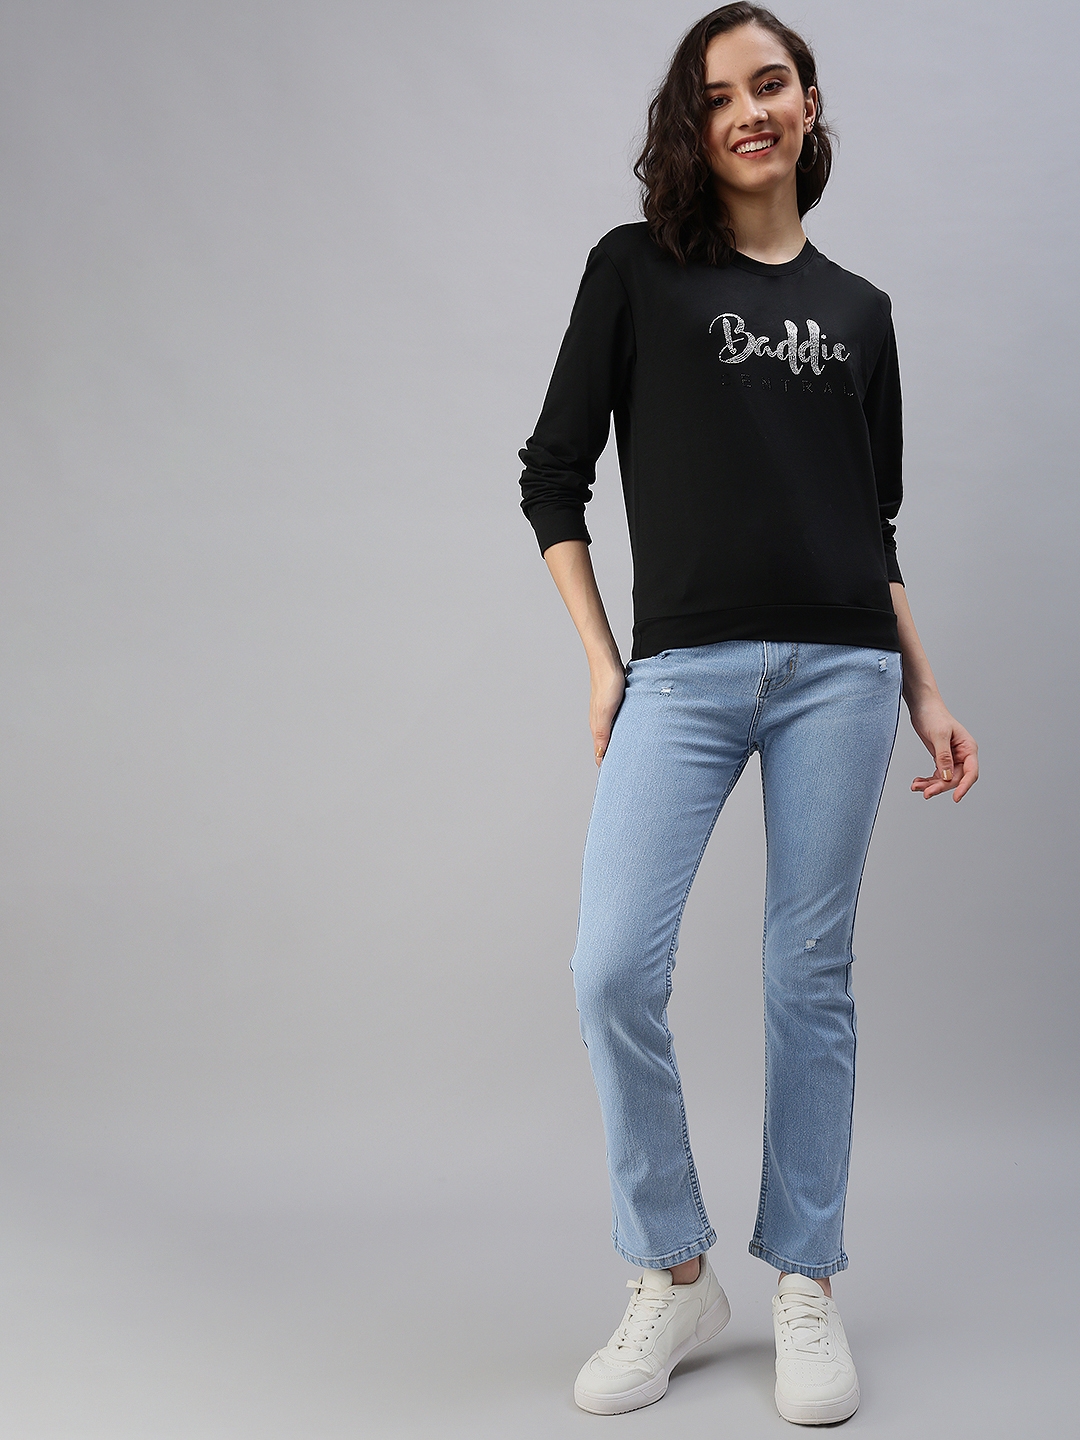 Women's Black Cotton Solid Sweatshirts